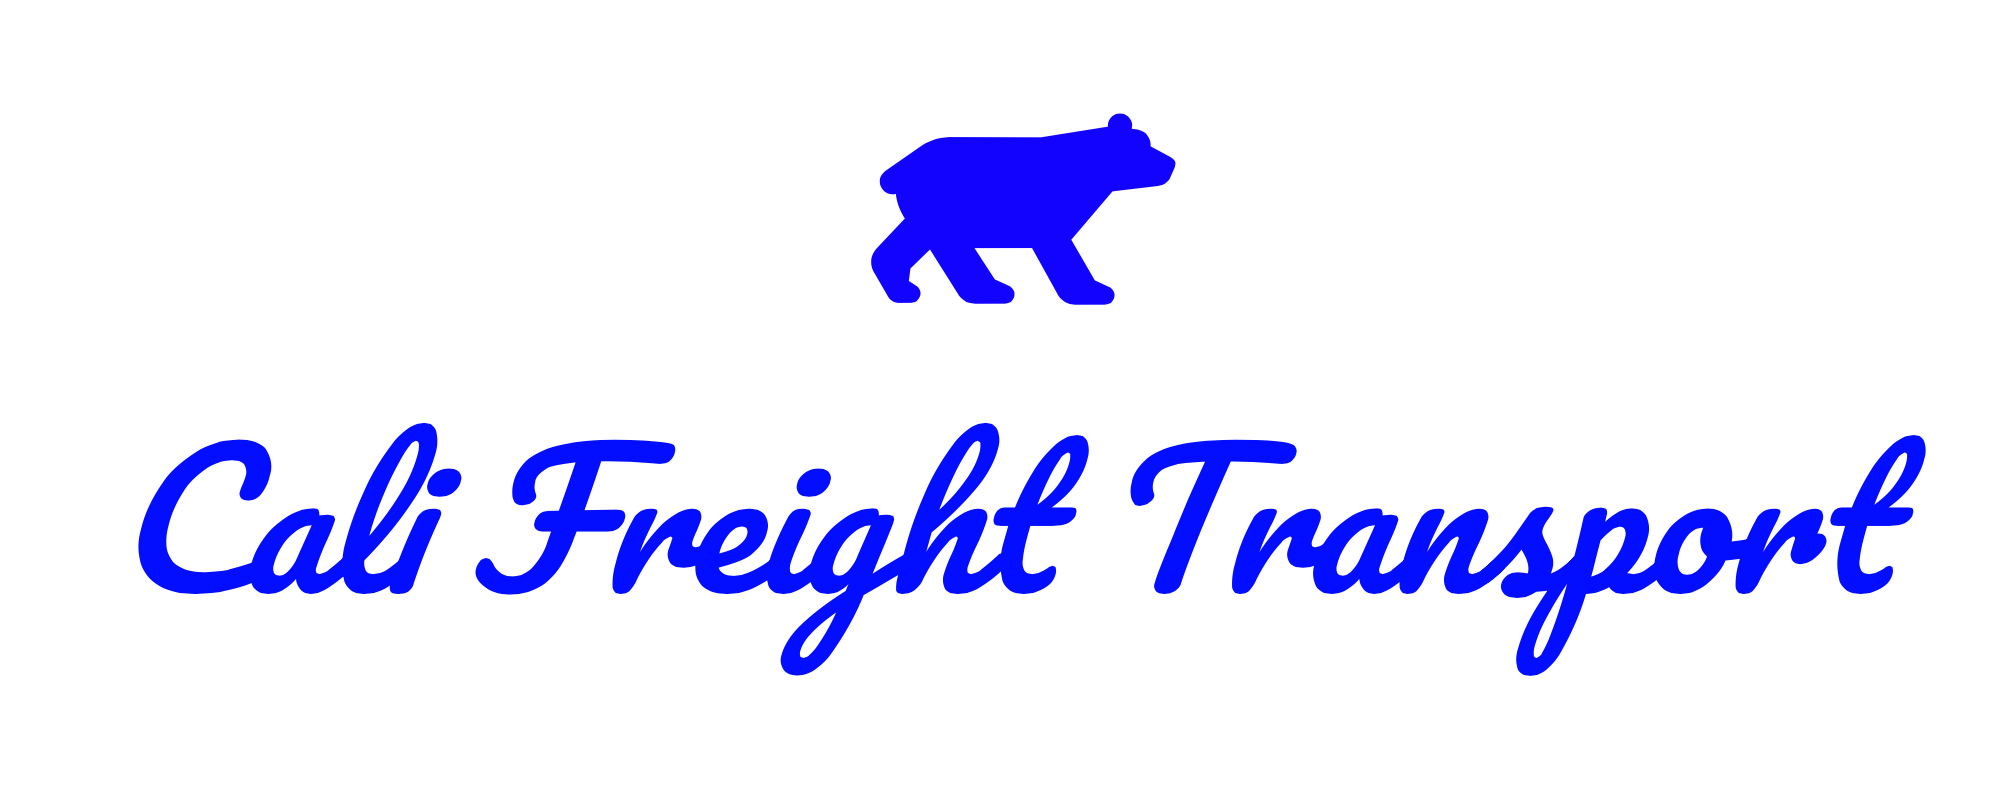 Cali Freight Transport, Inc.